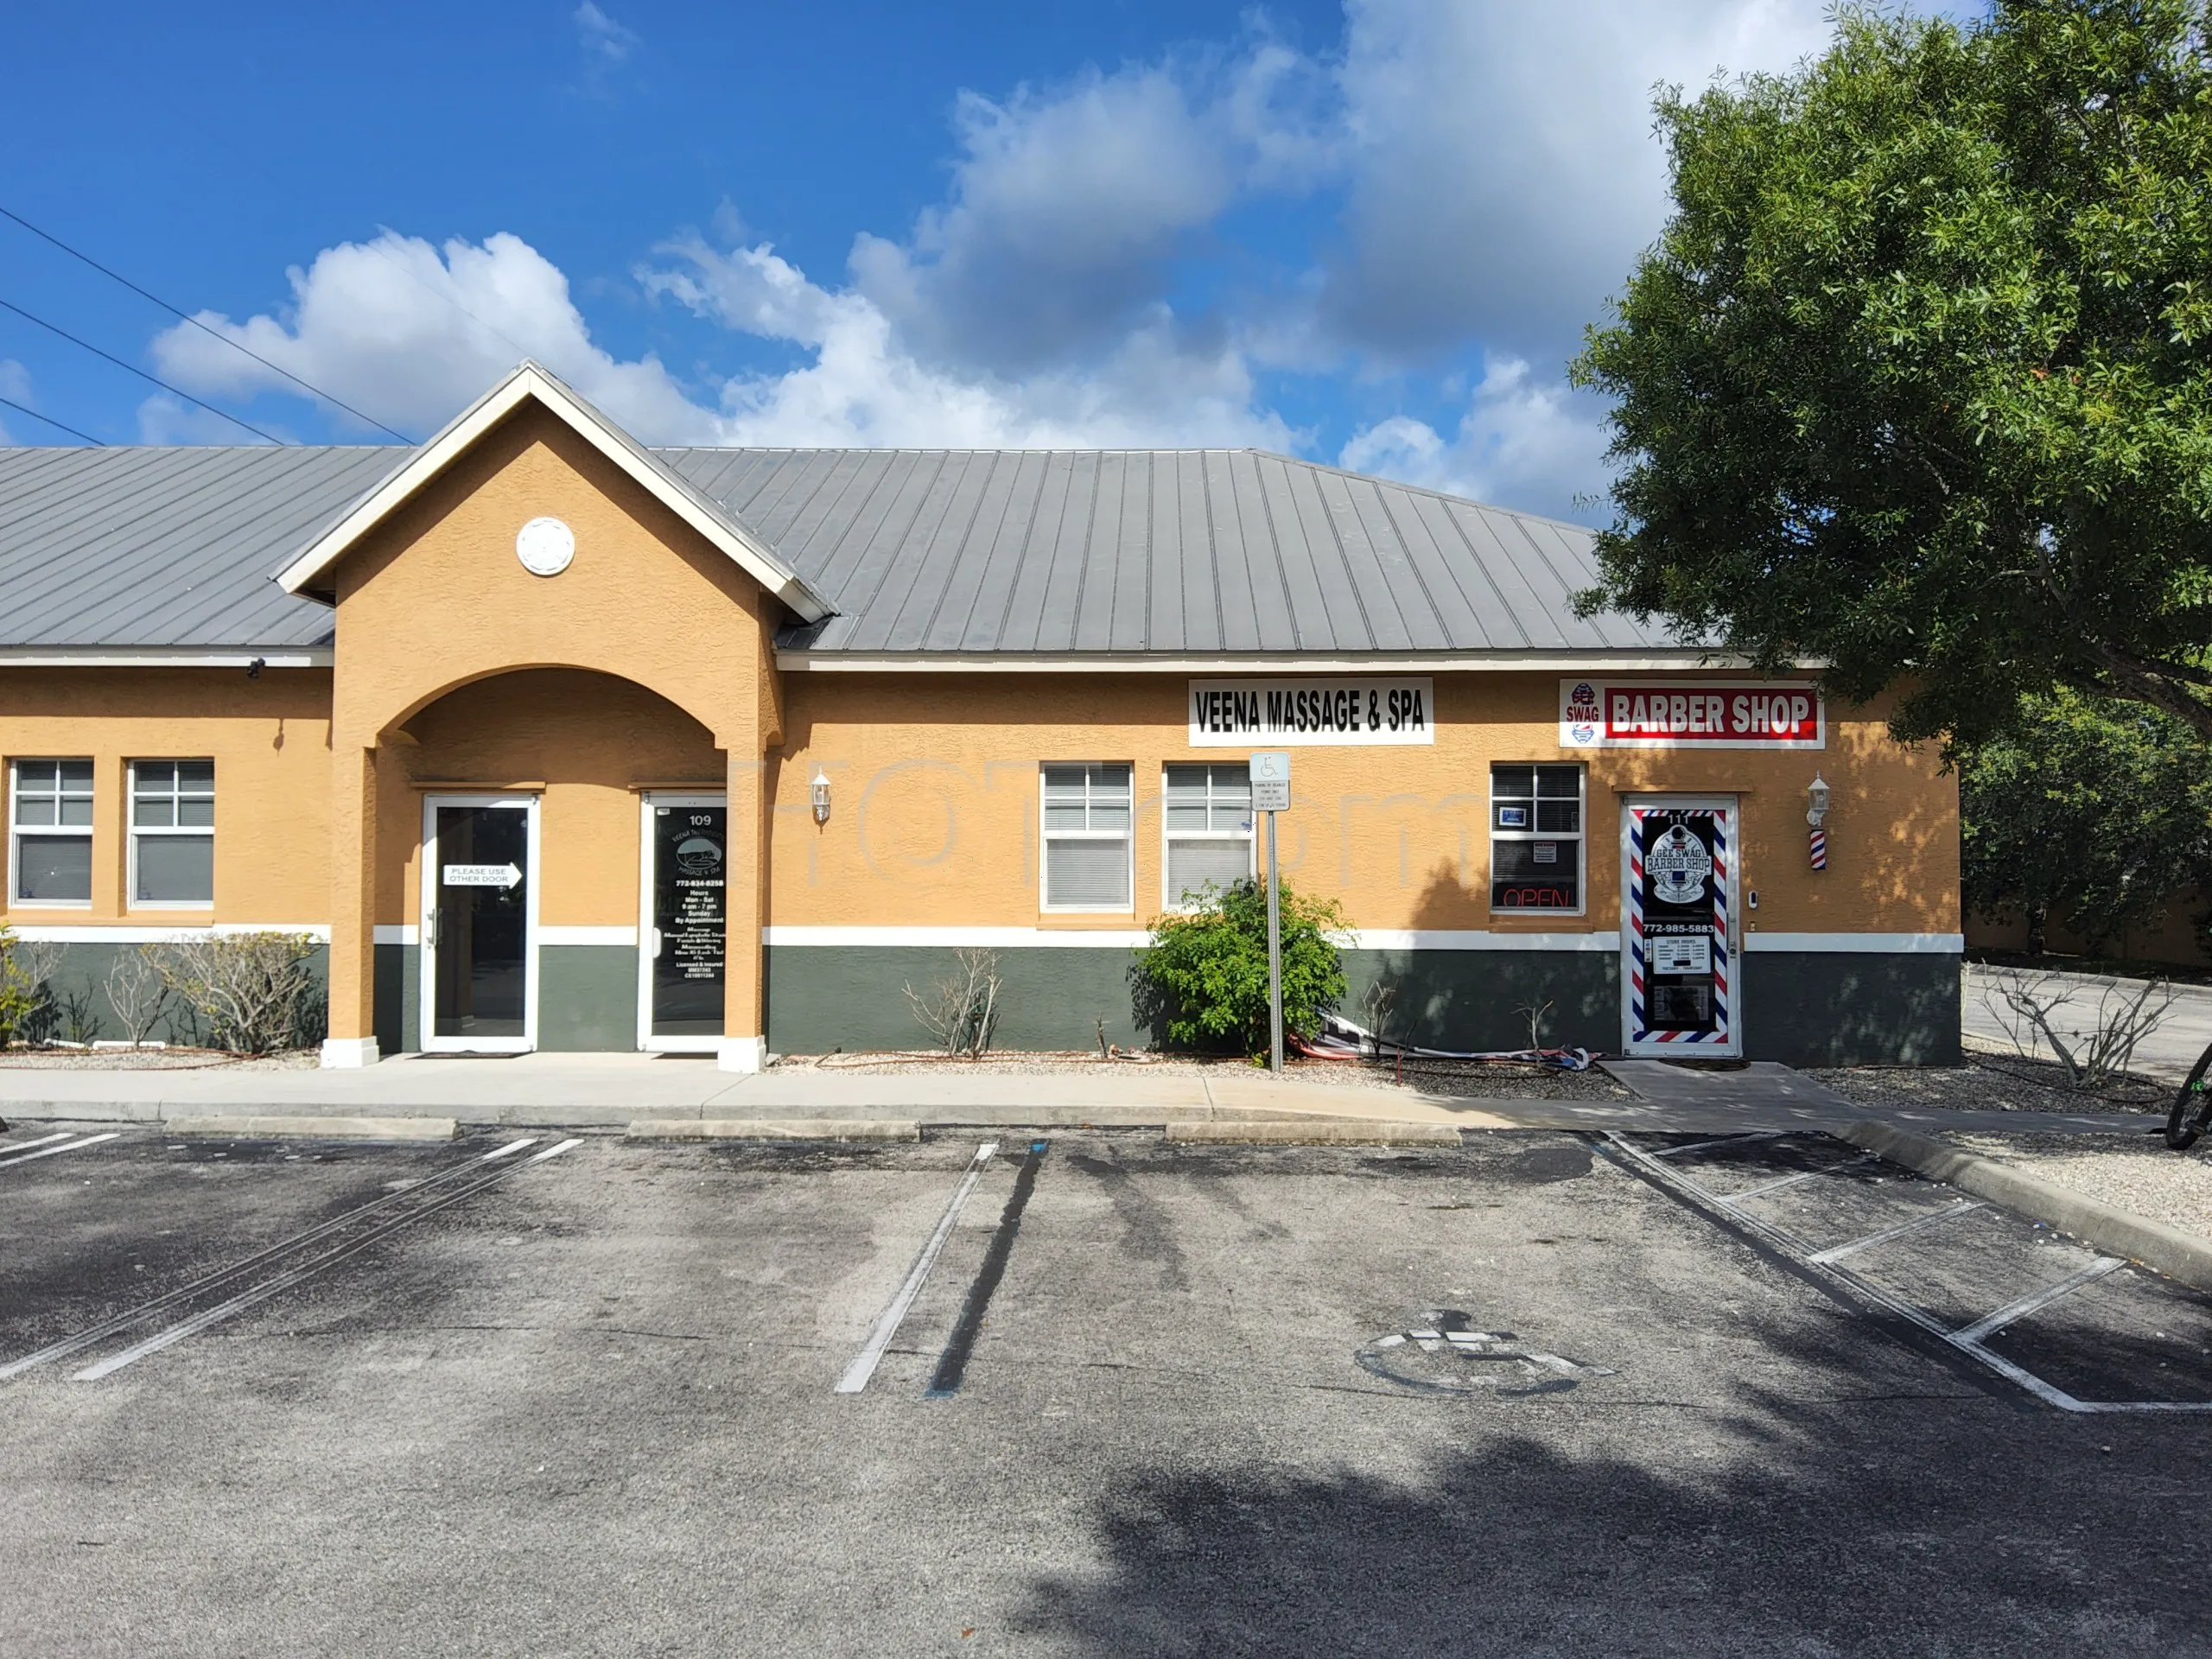 Port Saint Lucie, Florida Veena Massage and Spa